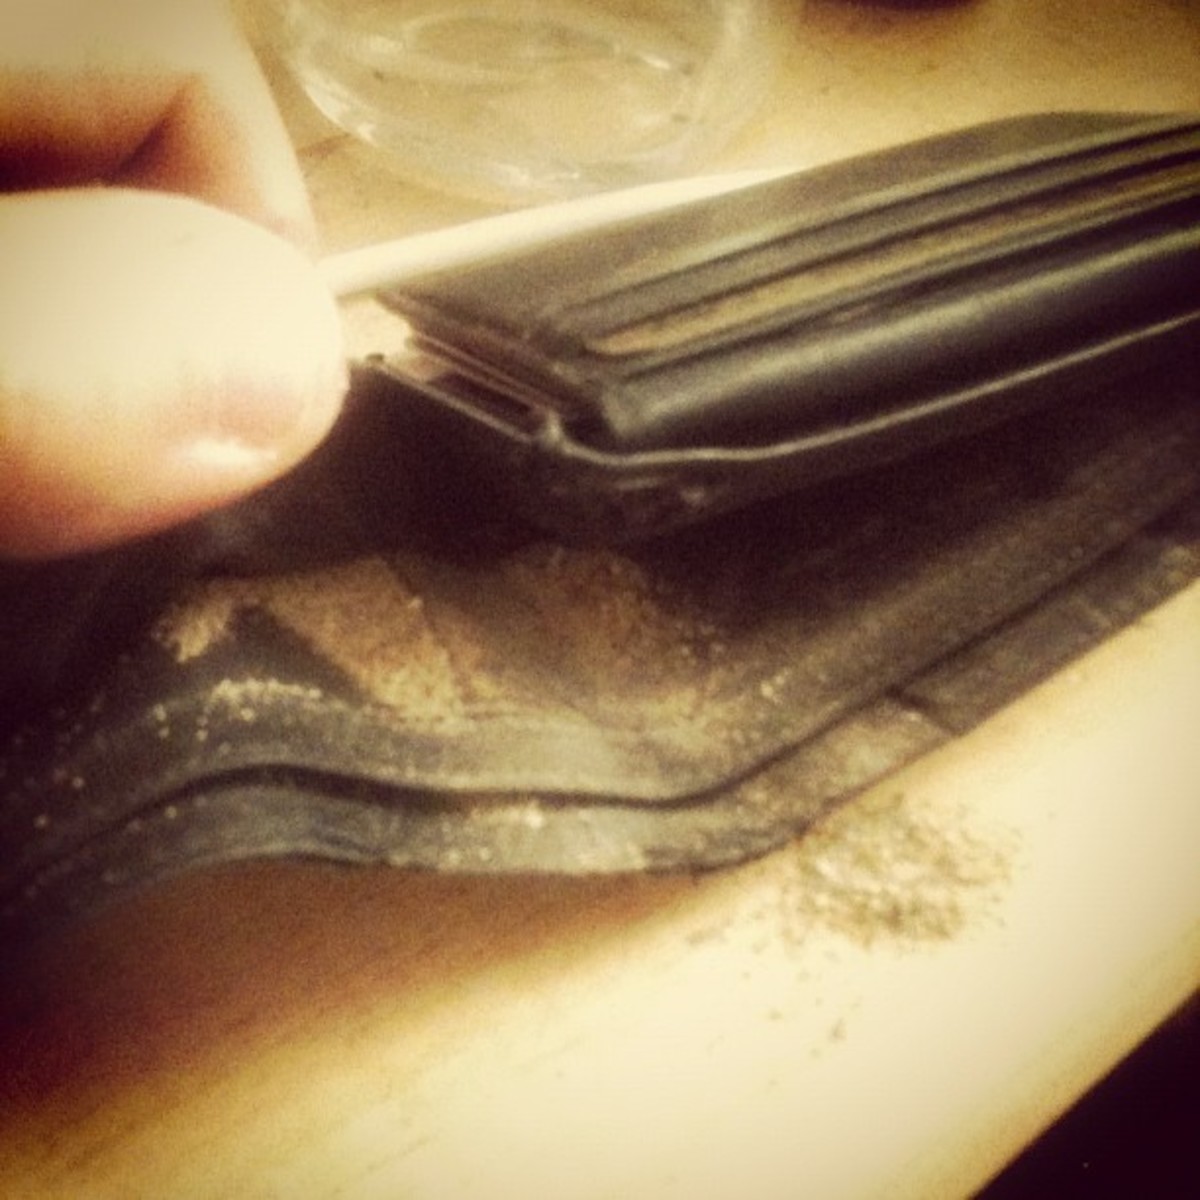 Yep. Sand in the wallet.